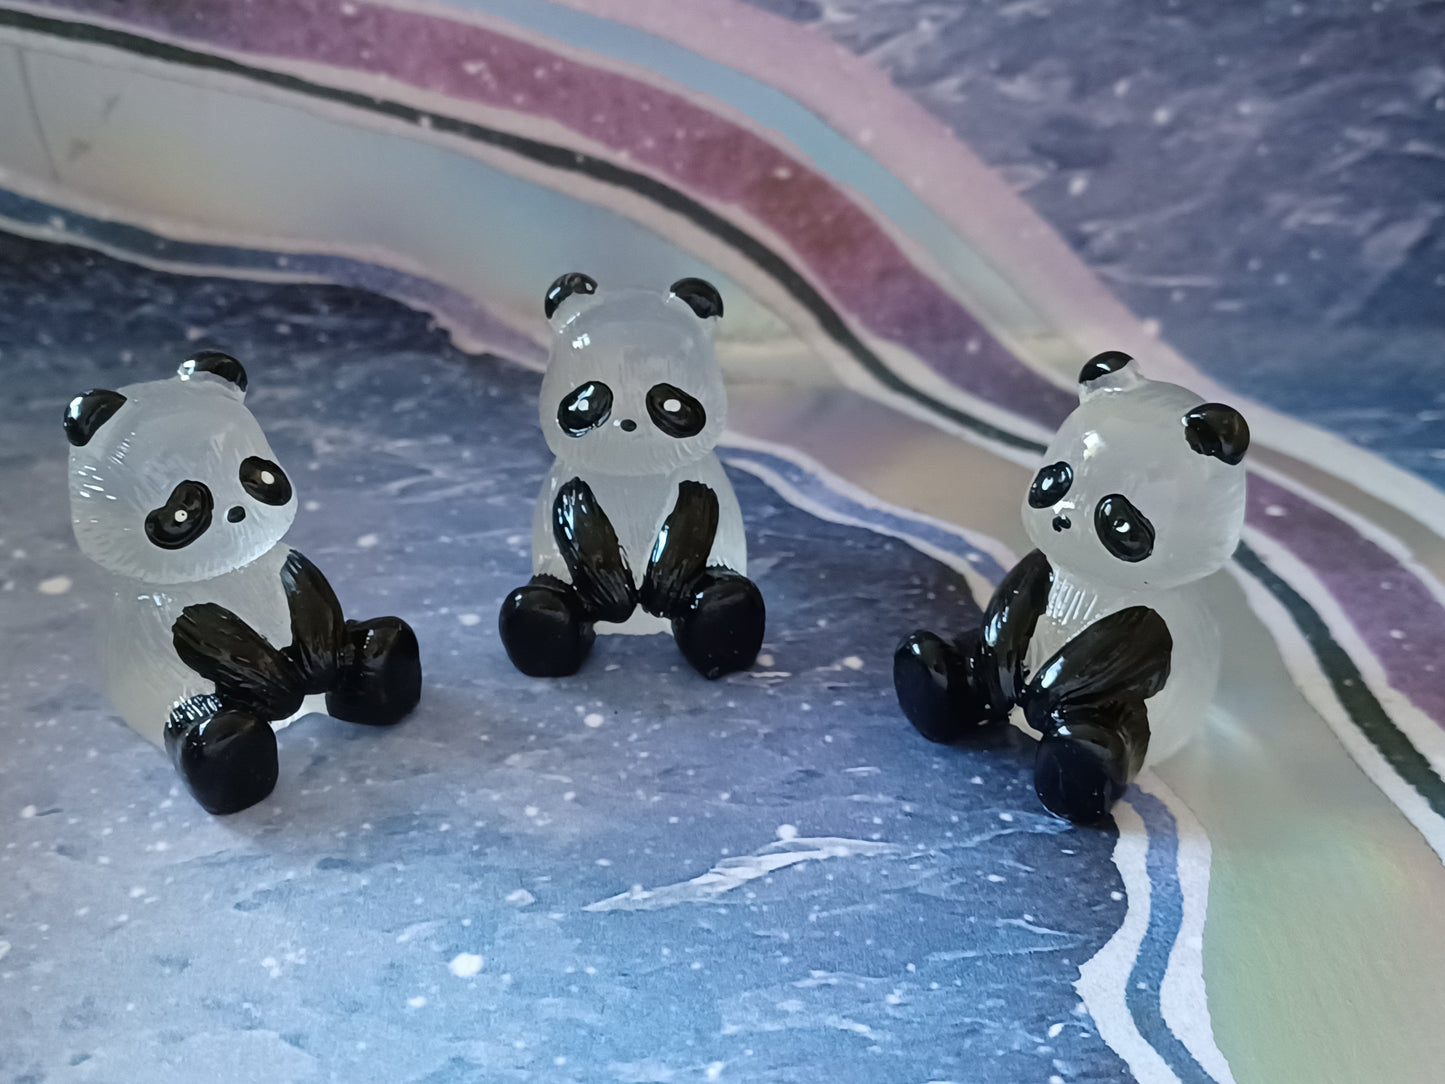 Sitting Panda Arms Down - Glows